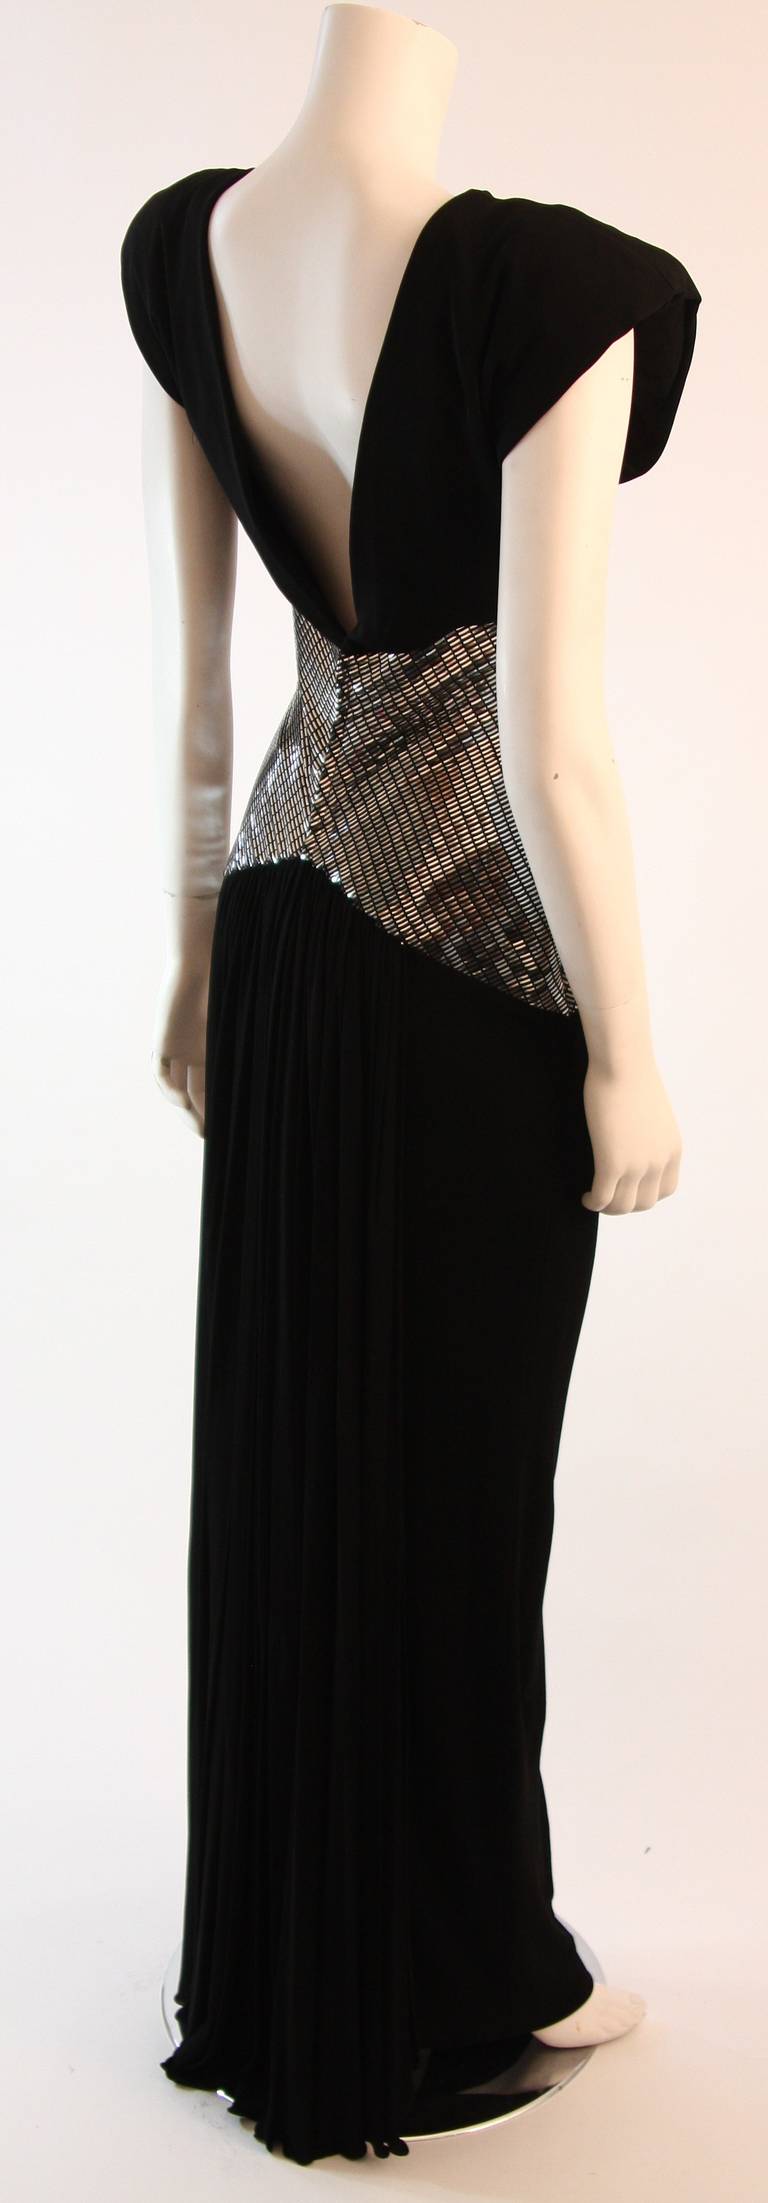 Ravishing Vicky Tiel Black Futurism Gown with Metallic Detail 2